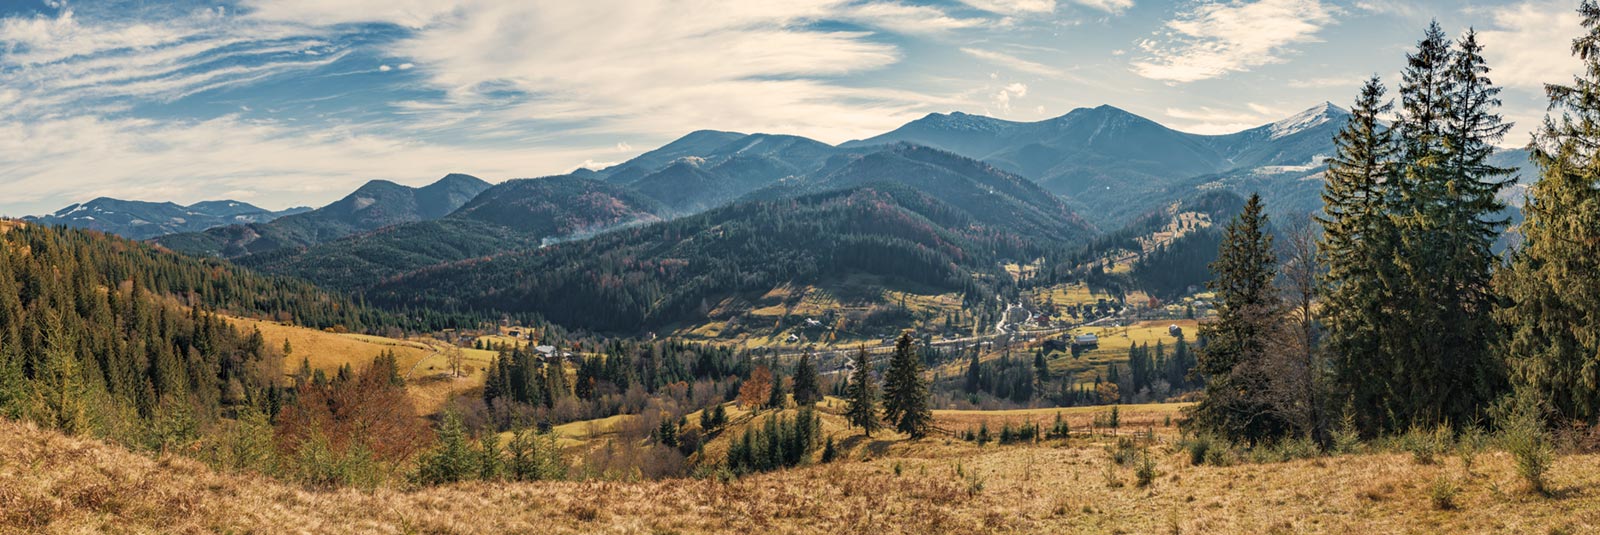 Travel Carpathia - Făgăraș Mountains